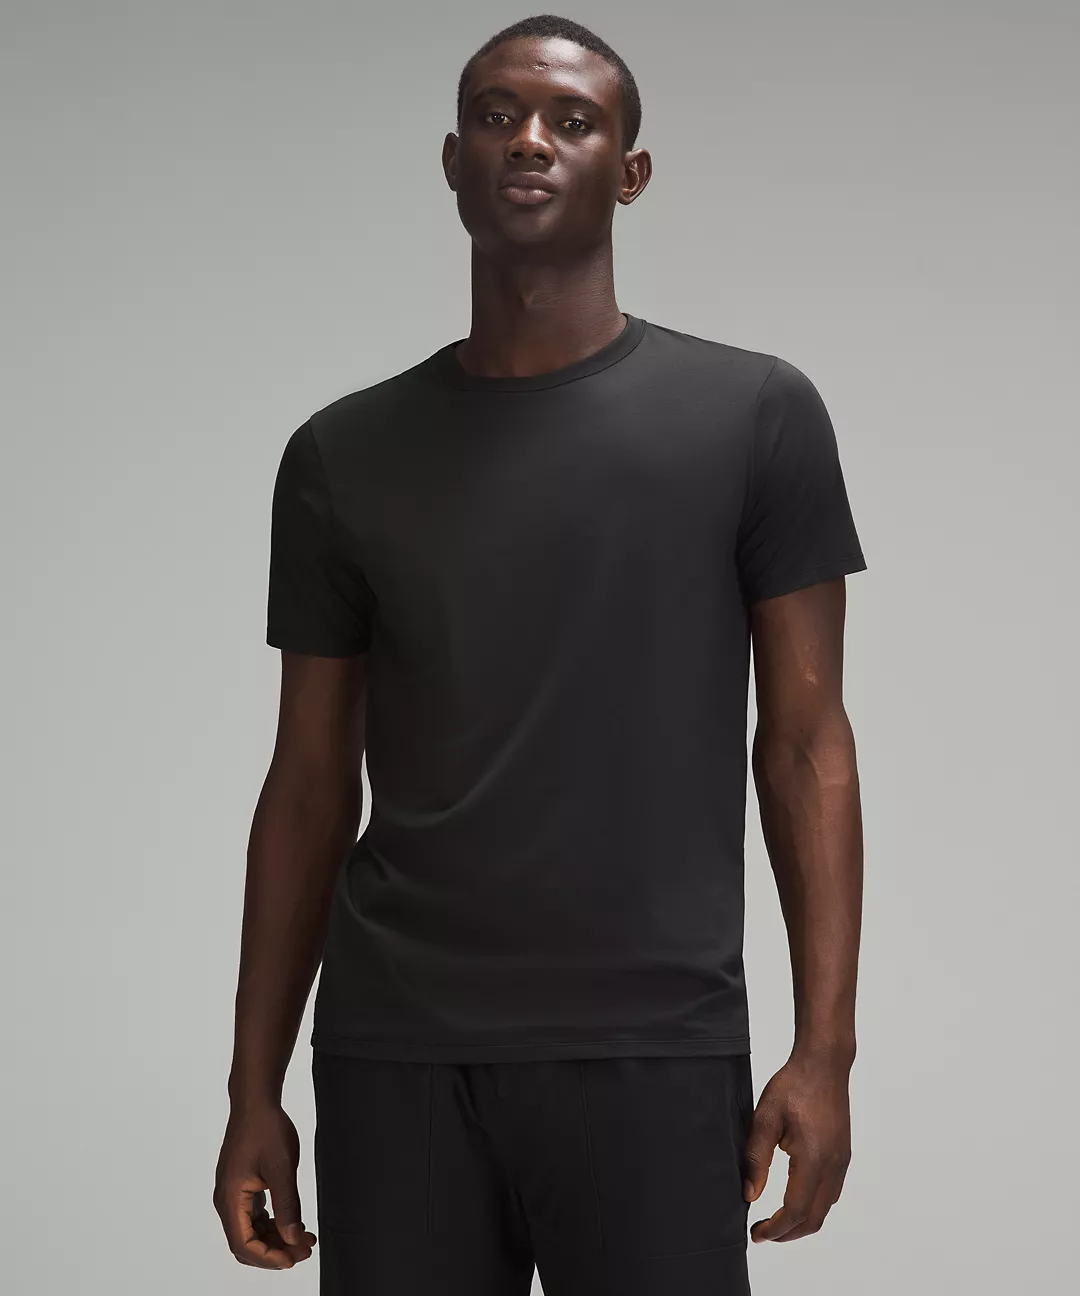 Best Black T Shirts for Men: 7 Versatile Options | TIME Stamped